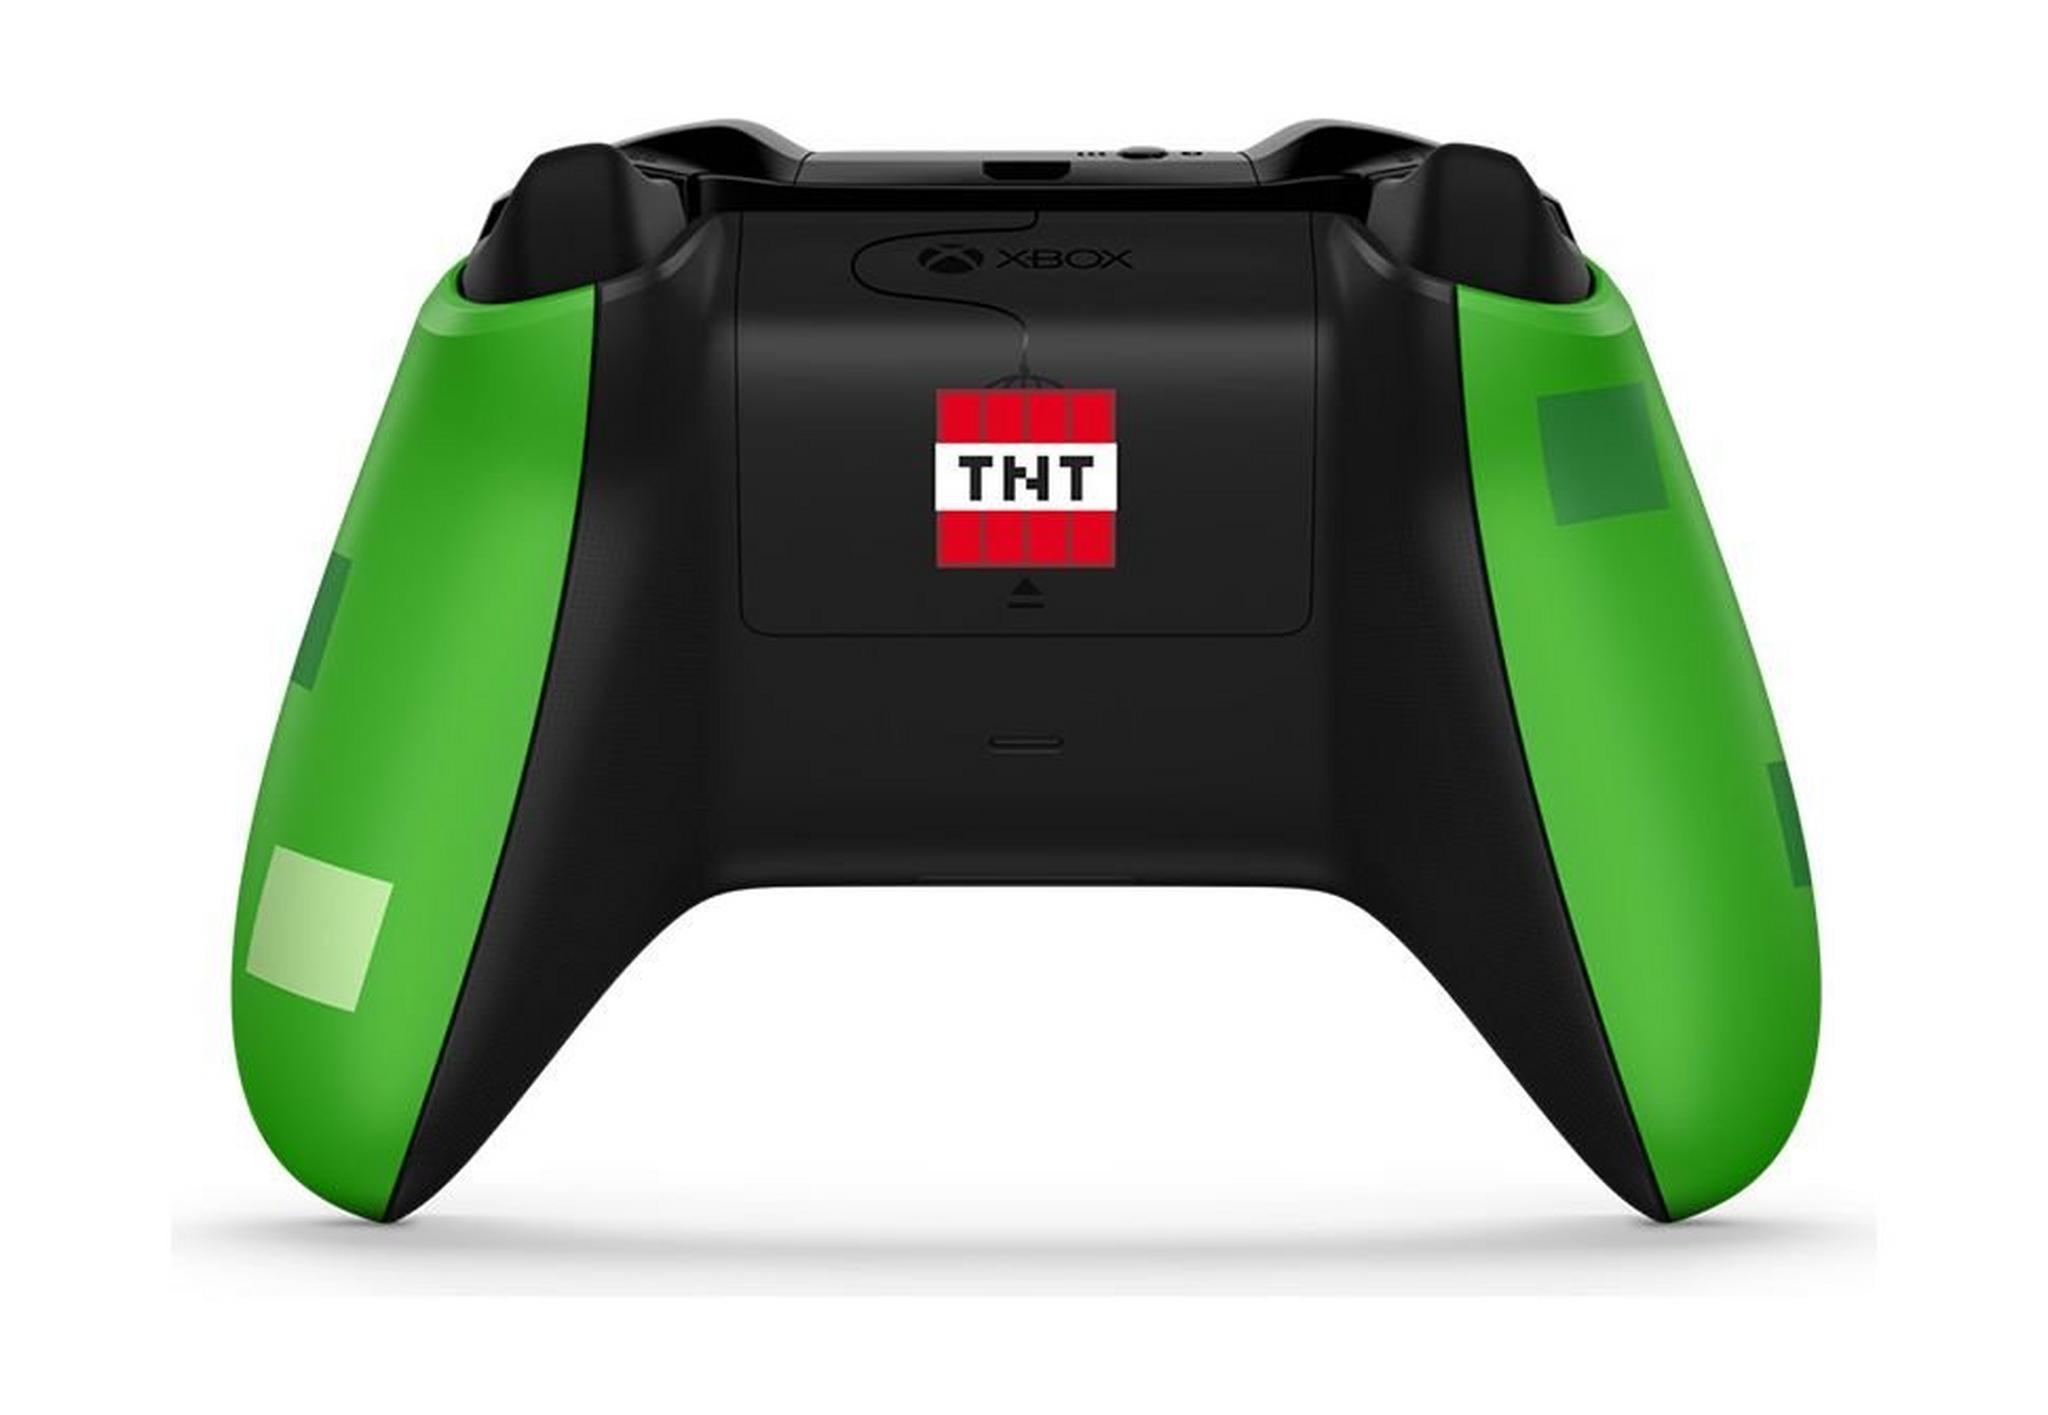 Microsoft Xbox One Minecraft Creeper Wireless Controller (WL3-00057) - Green